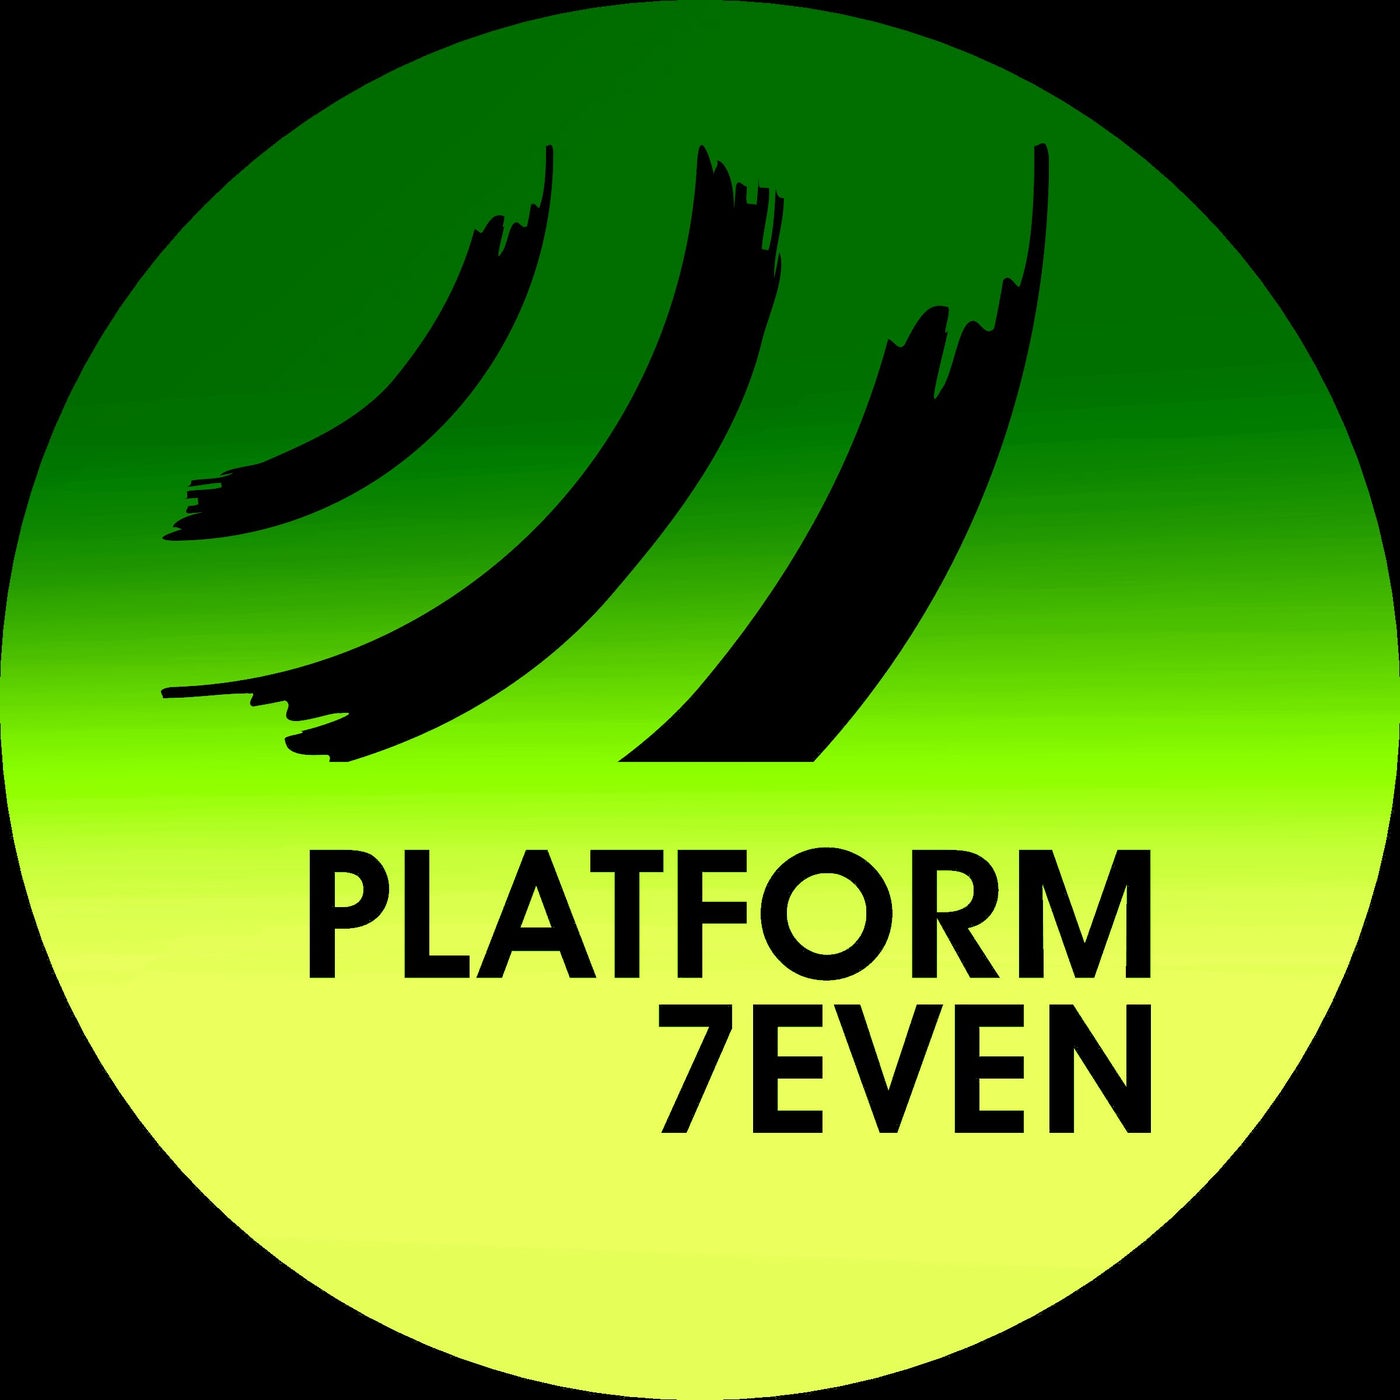 Platform 7evenVA